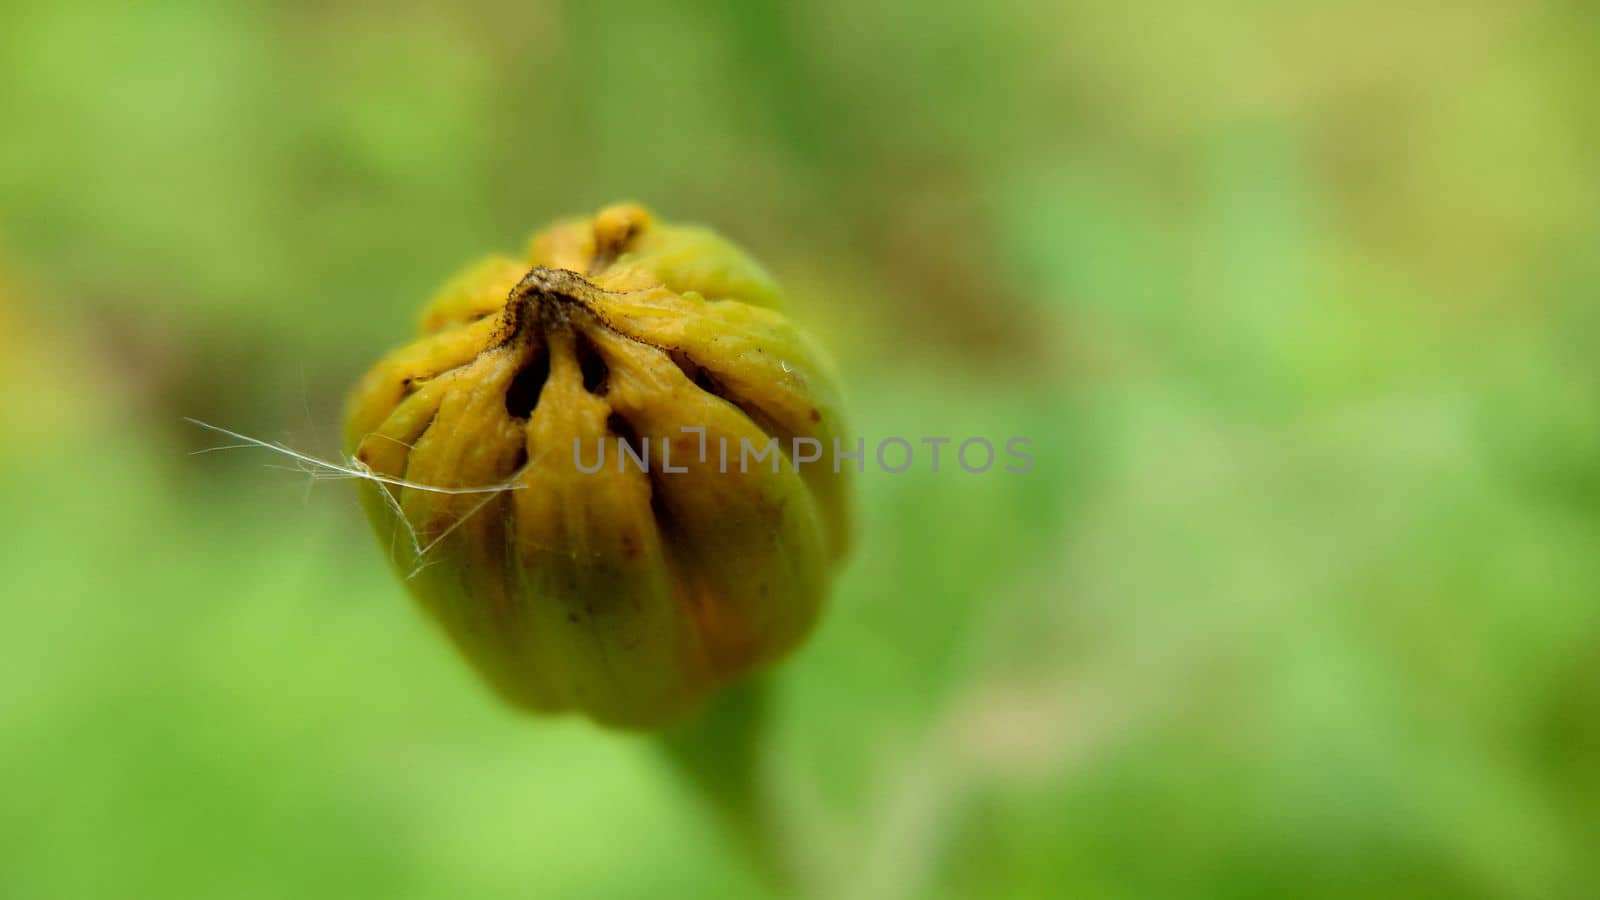 An unopened calendula bud on a grassy background by Mastak80